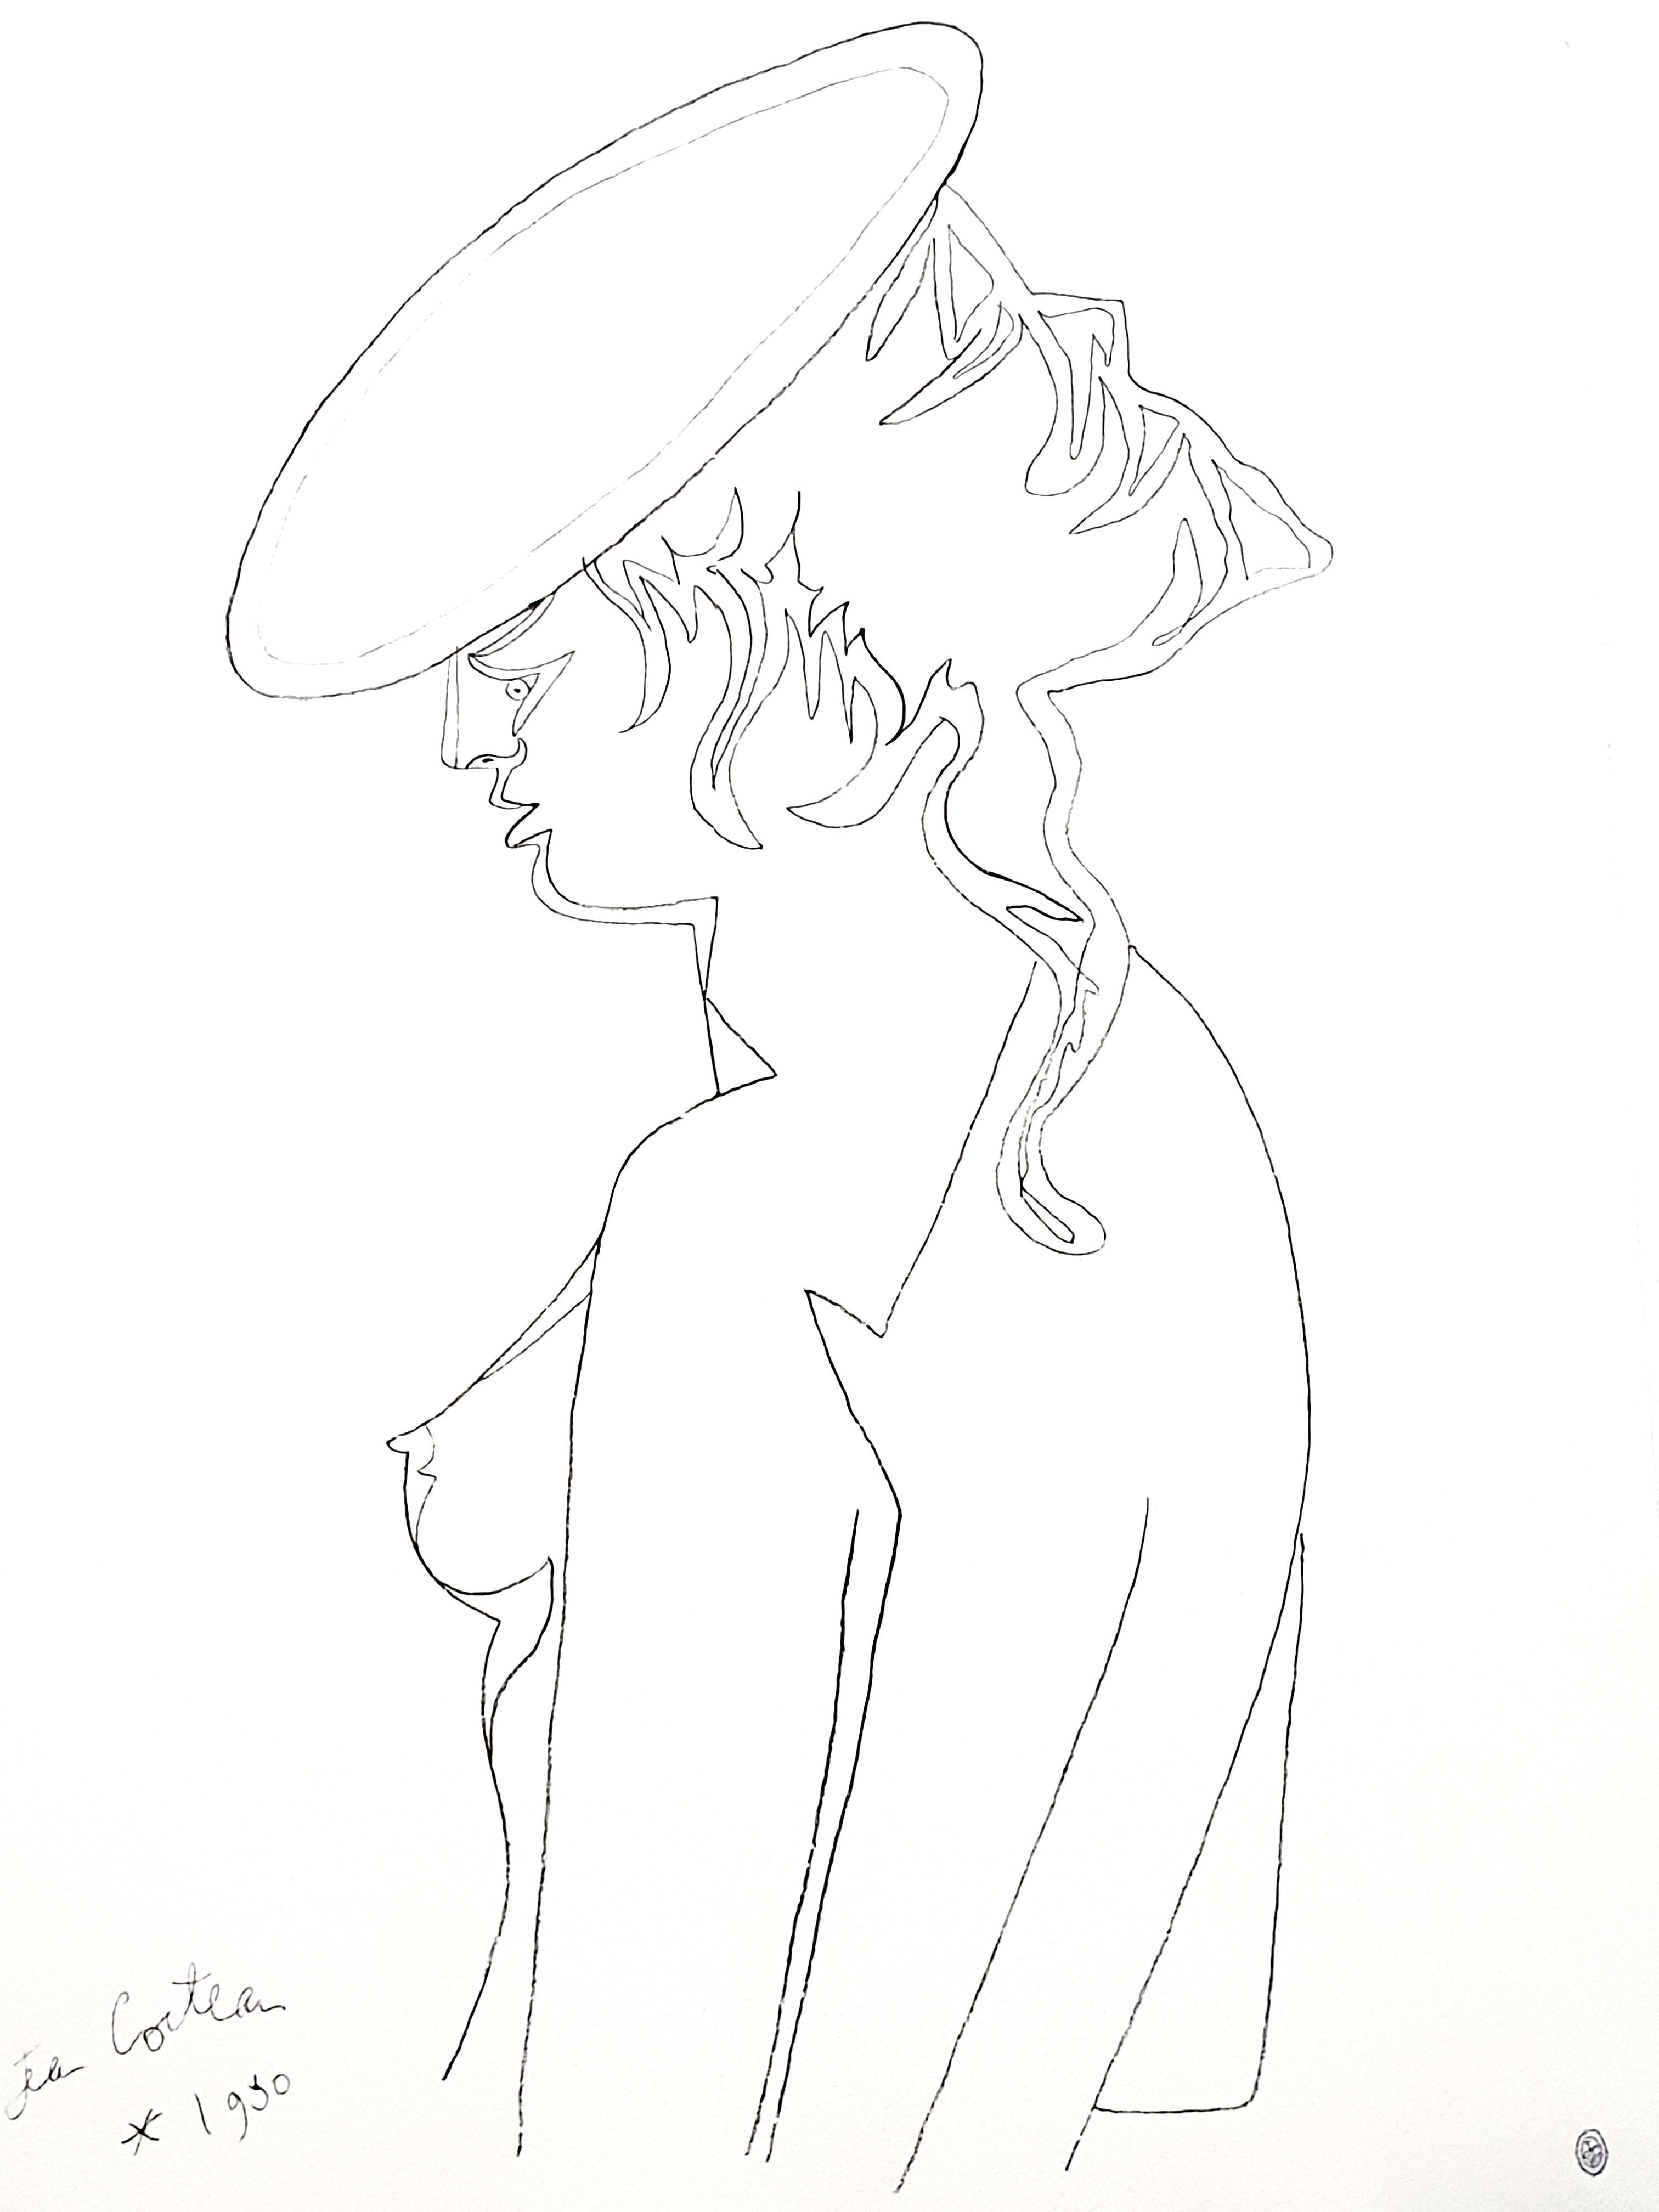 Jean Cocteau - Woman's Profile - Original Lithograph